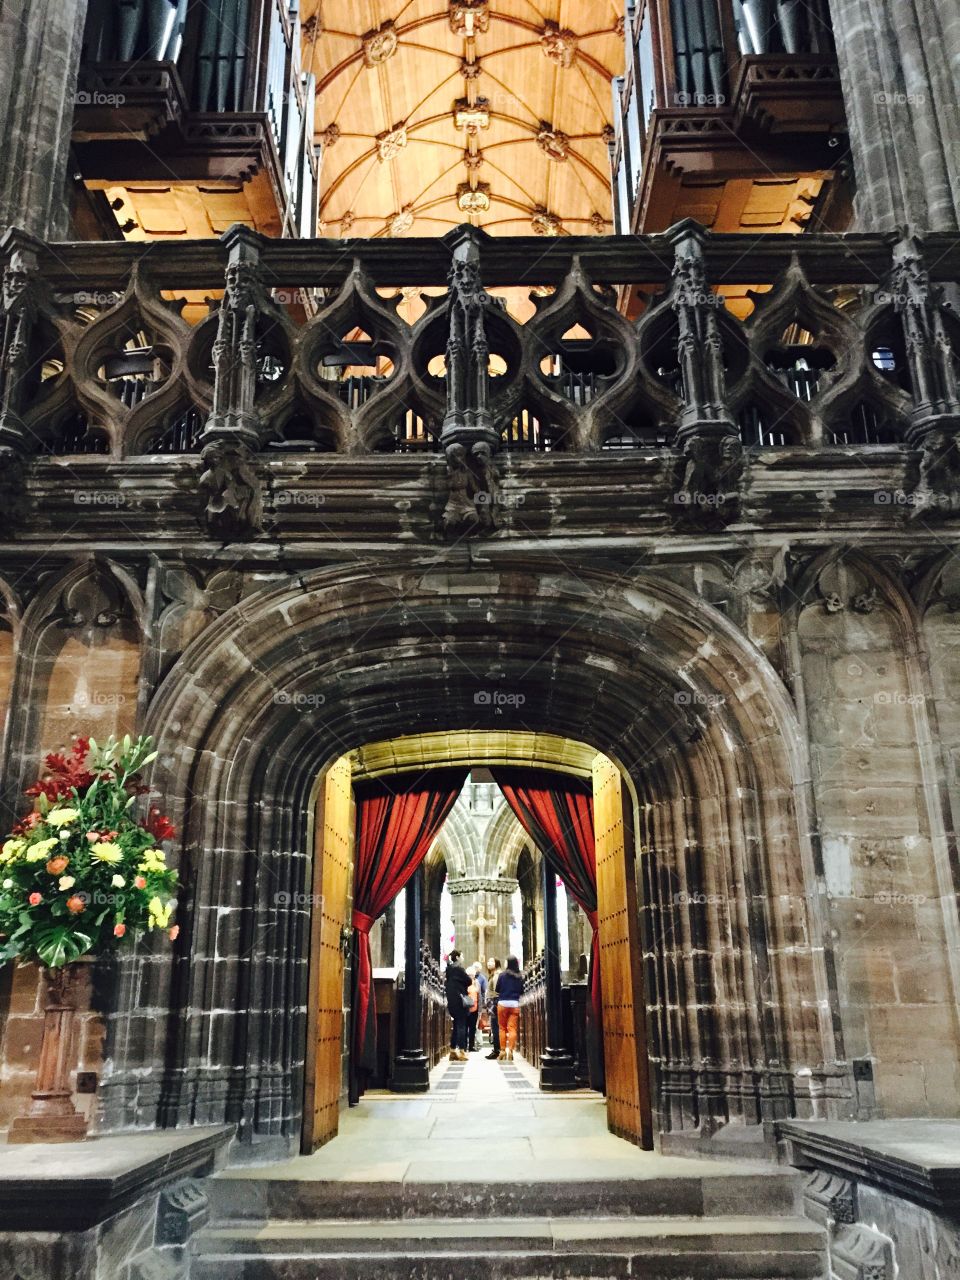 St. Mungos Cathedral in Glasgow, Scotland 